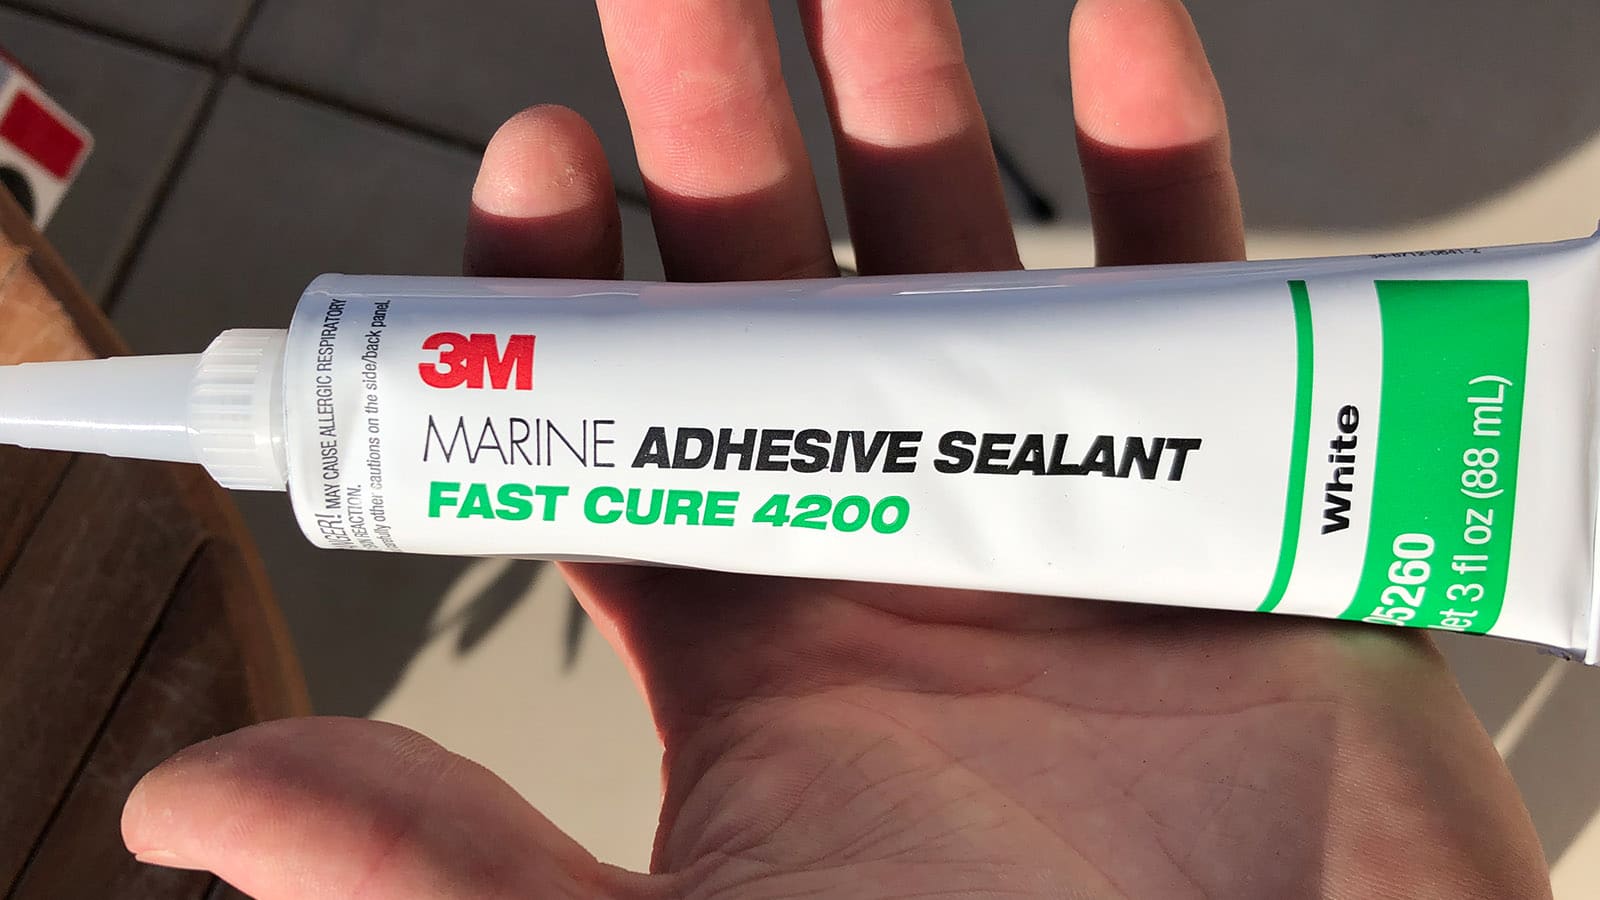 3M 4200 Marine Adhesive Sealant used for sealing SeablazeX2